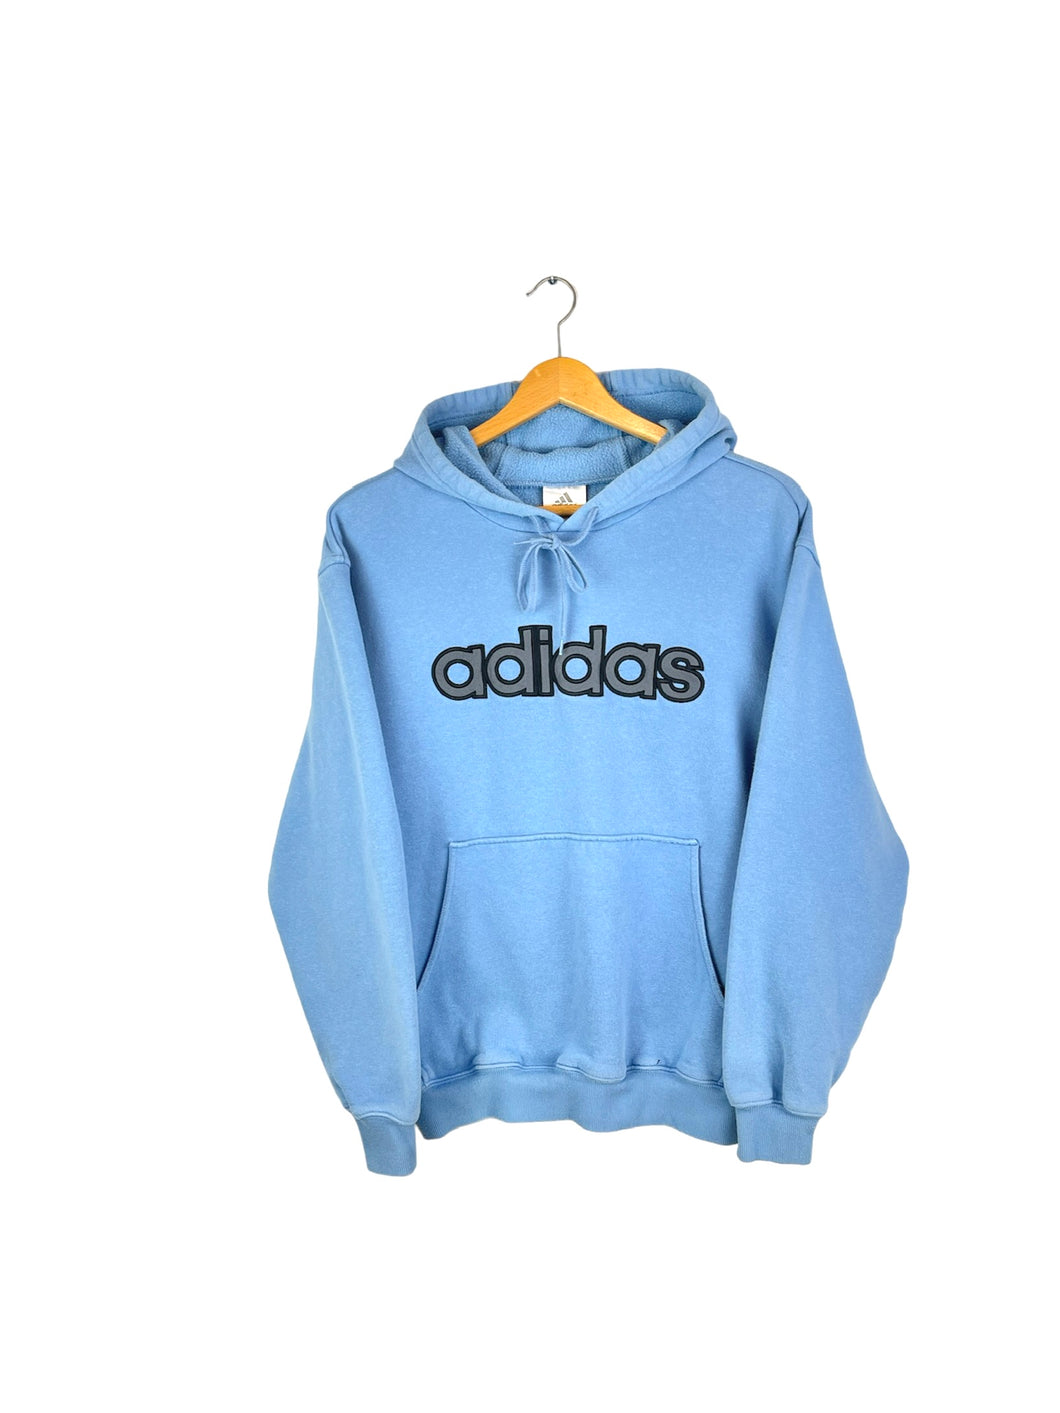 Adidas Sweatshirt - Small